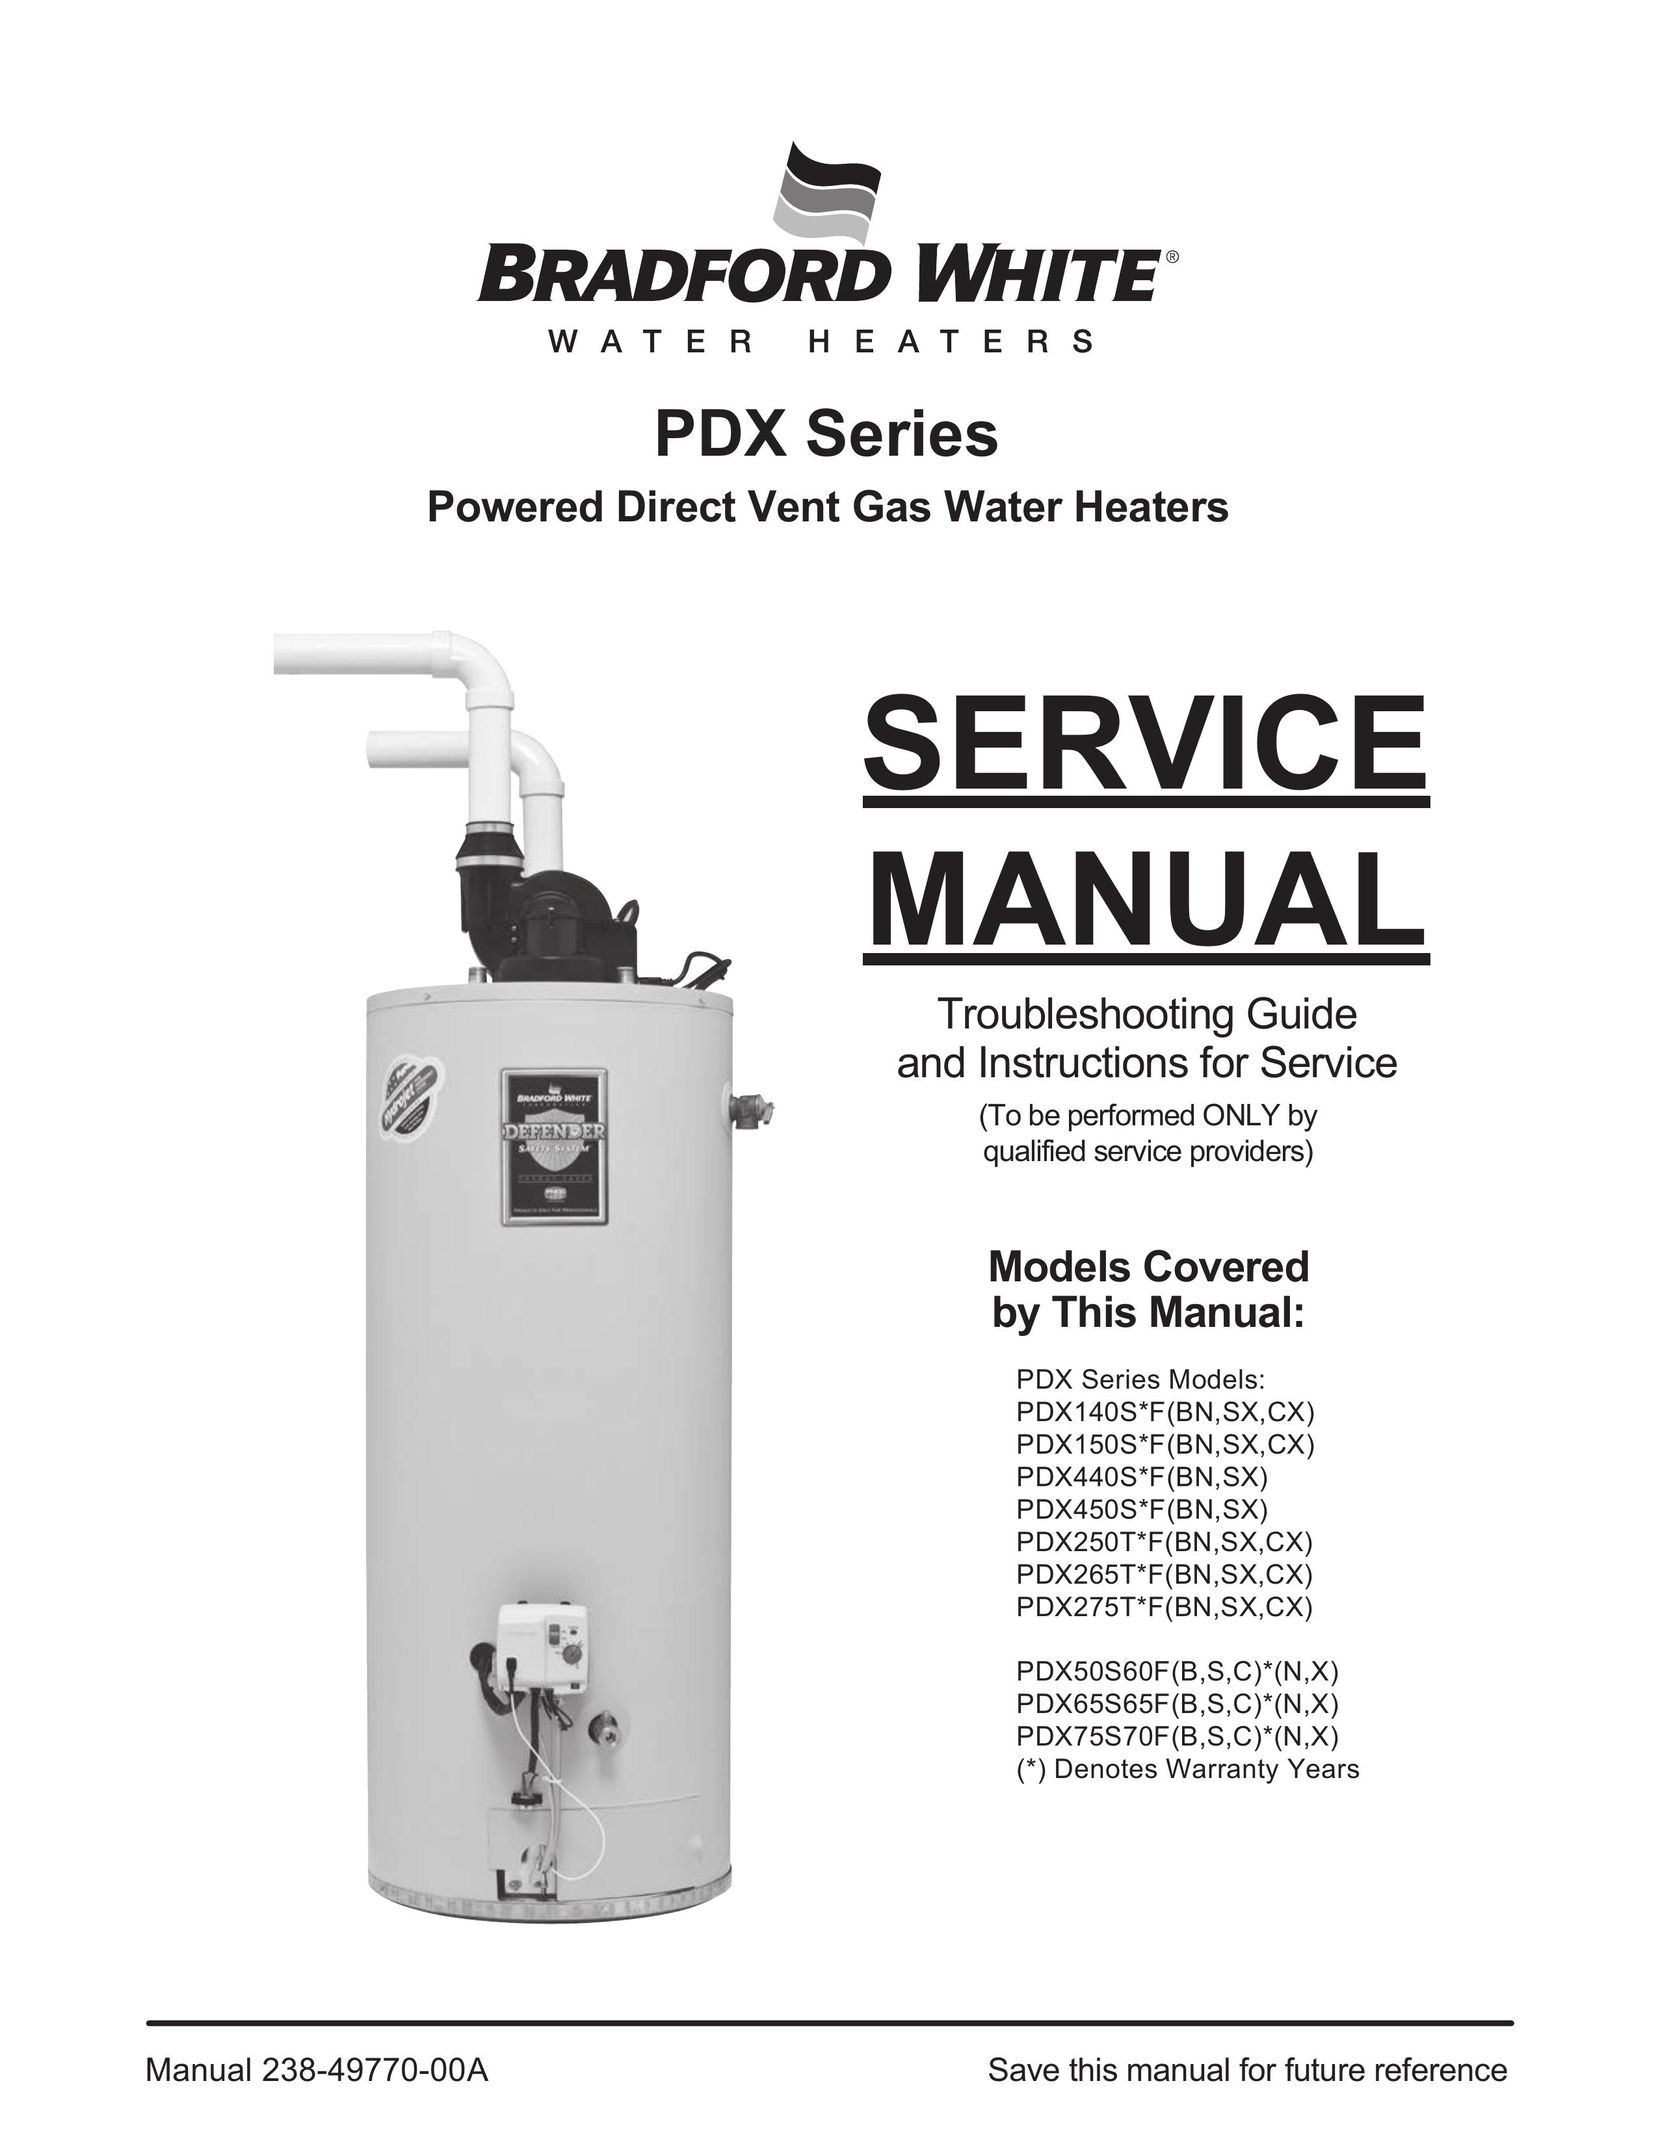 Honeywell PDX265T*F(BN,SX,CX) Water Heater User Manual